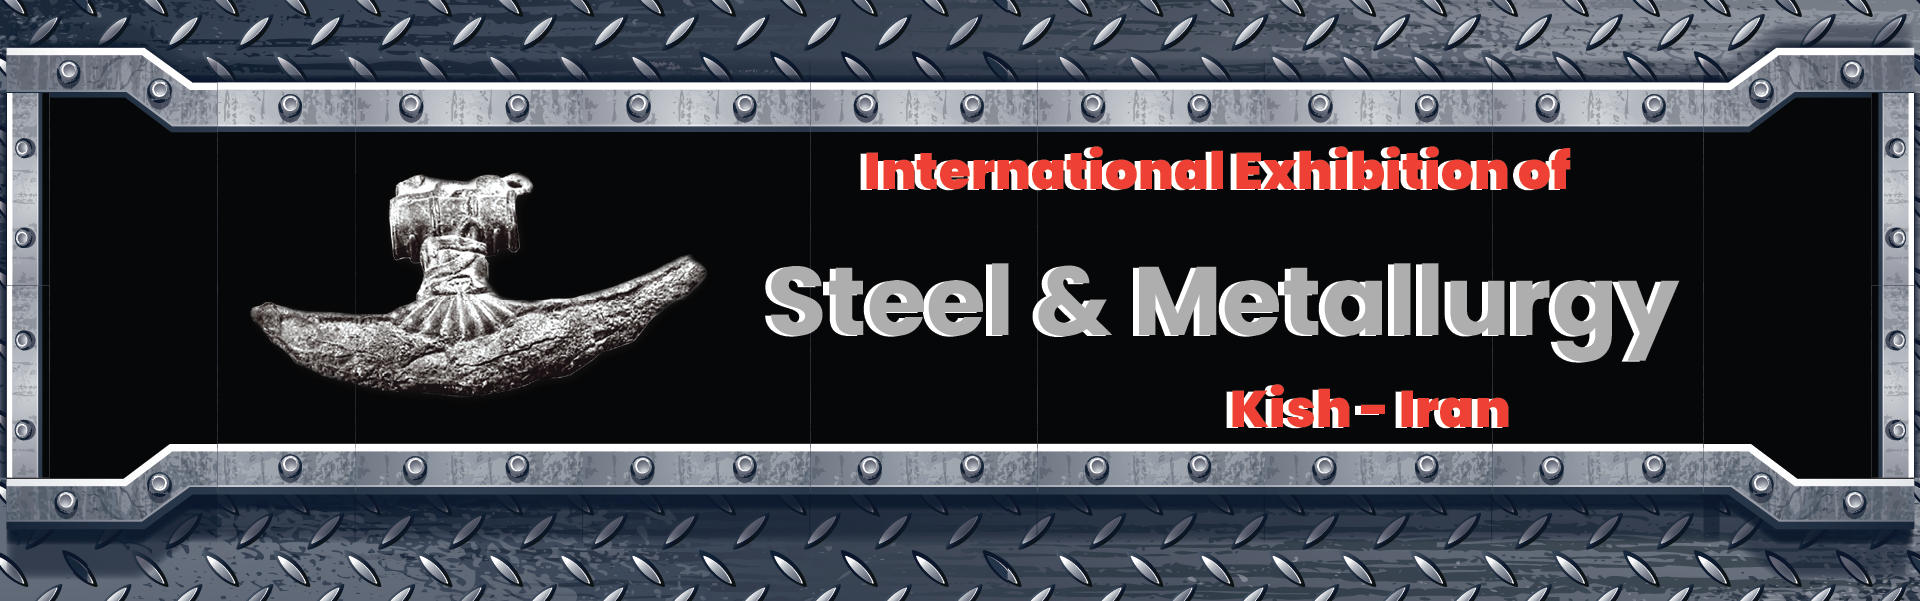 Iran Steel and Metallurgy Exhibition (Metal Expo)